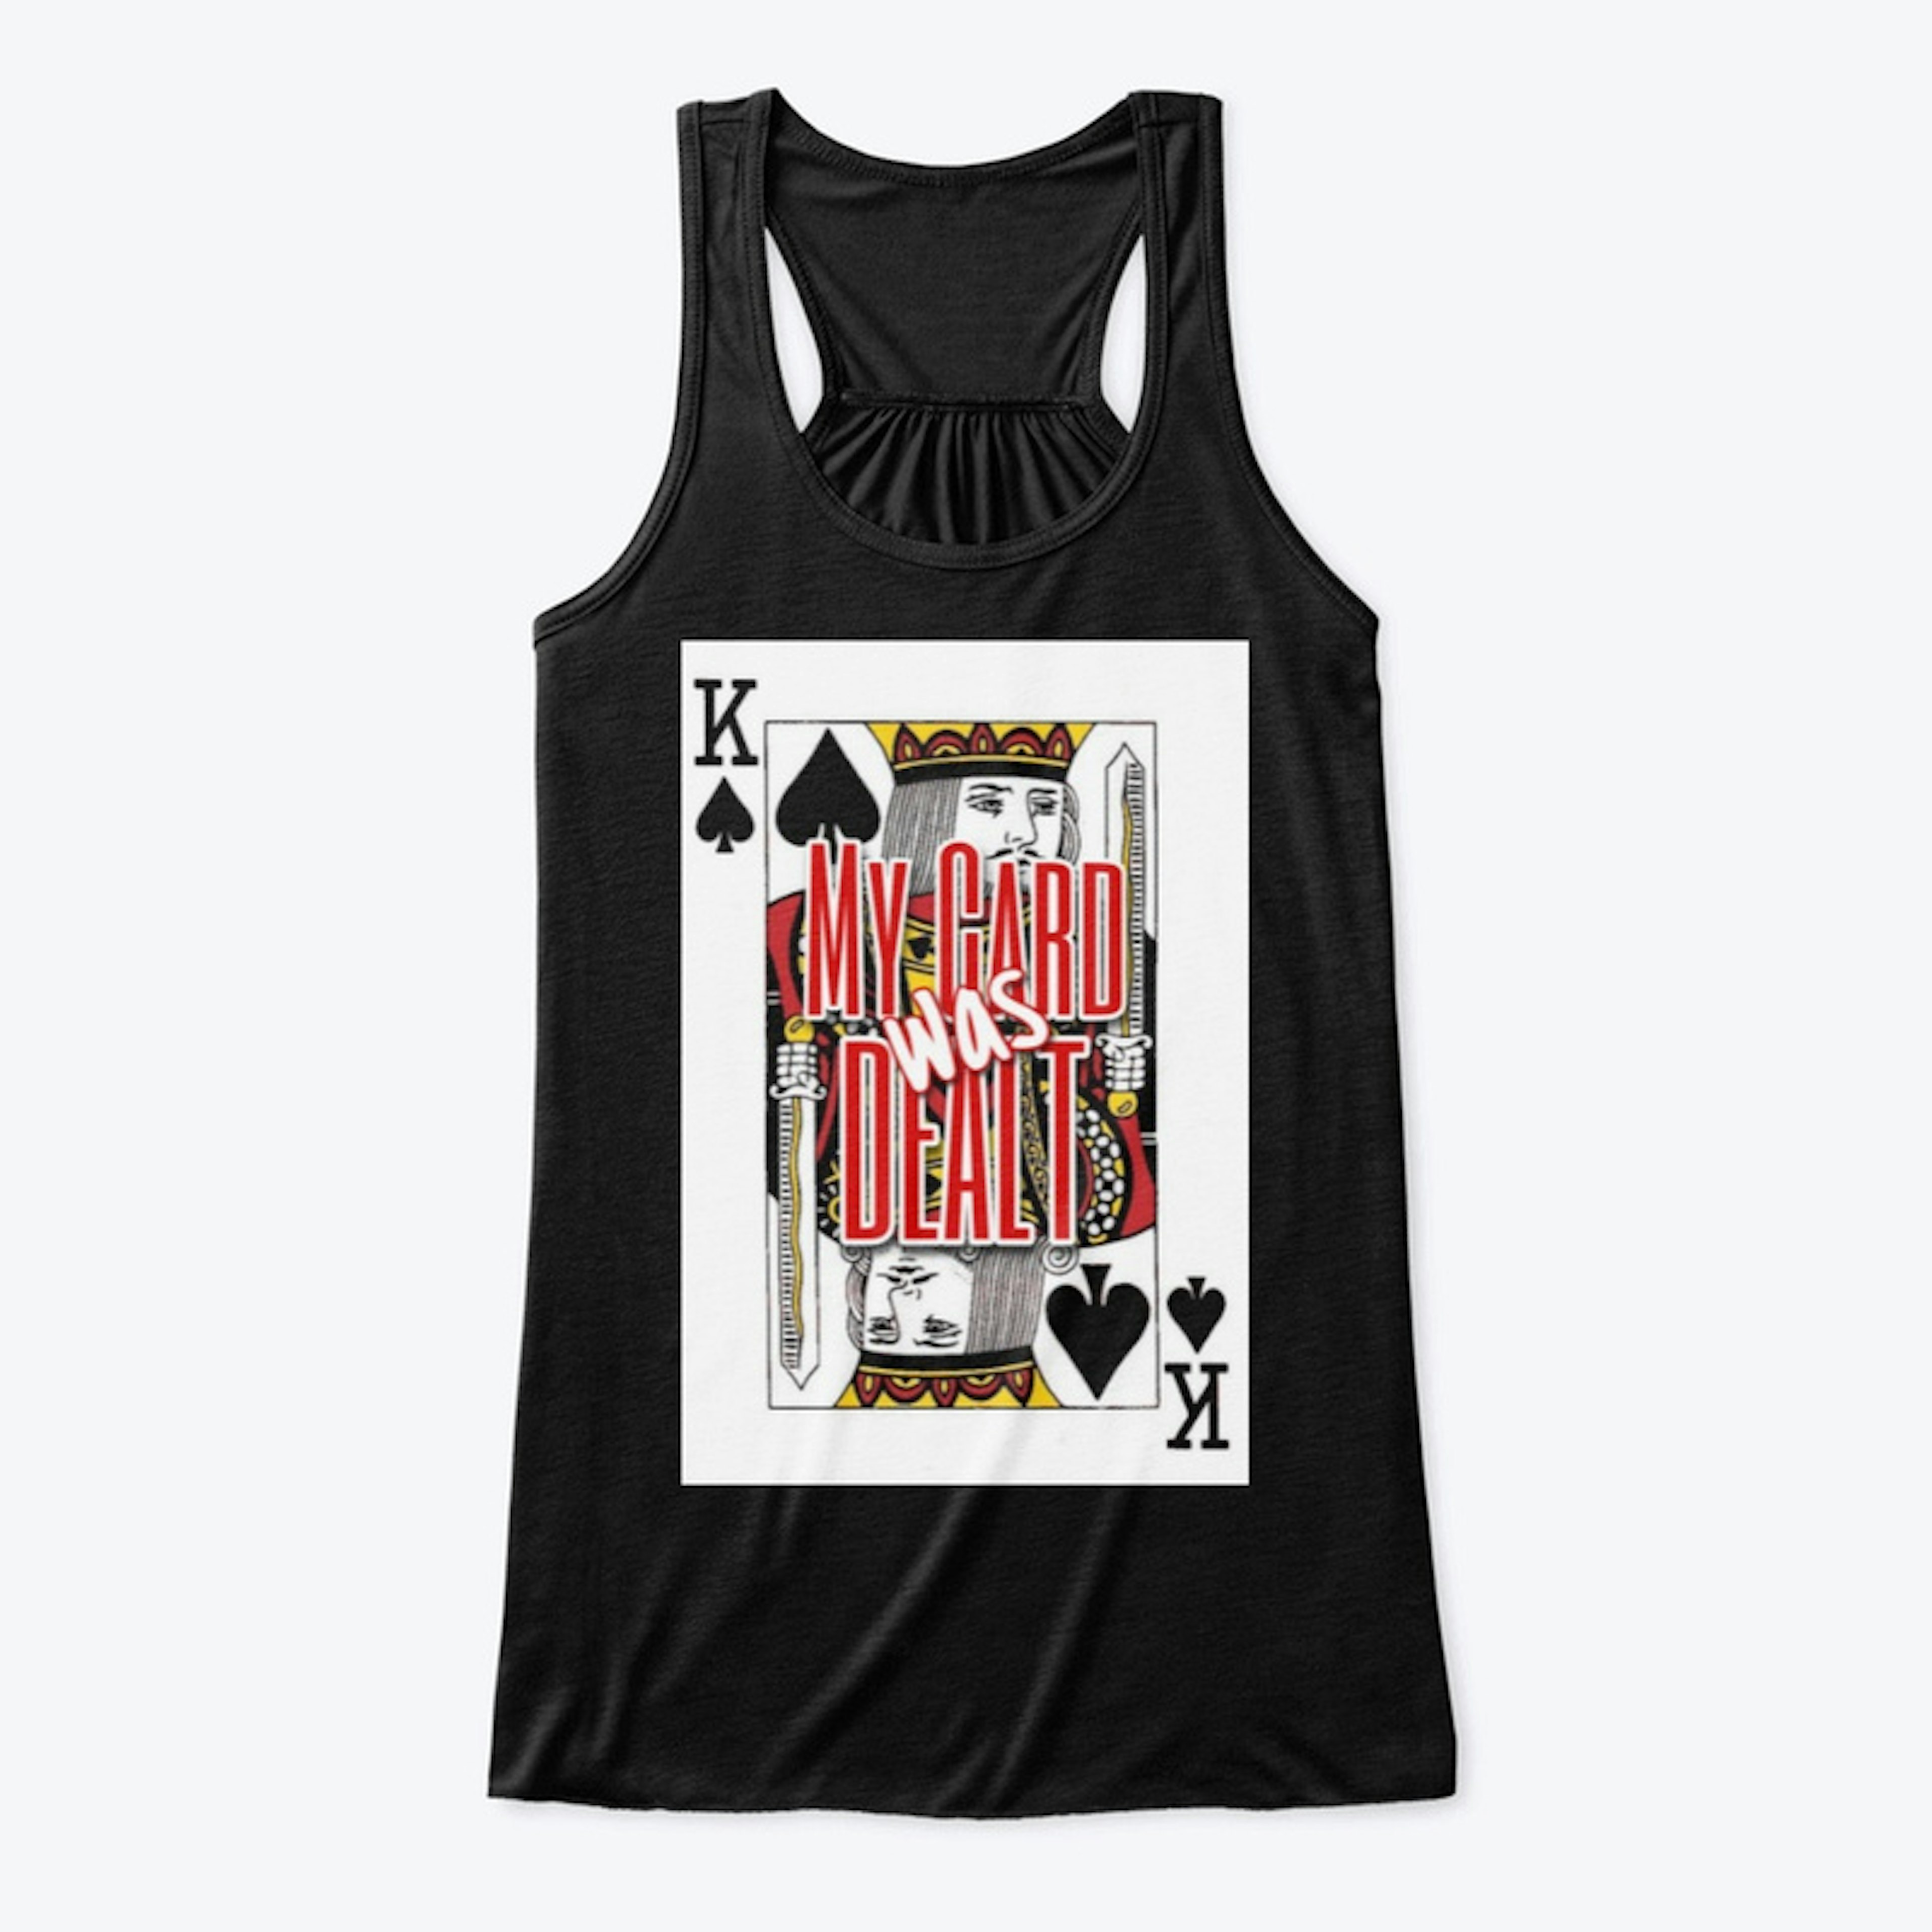 King Card T-shirt - King of Spades